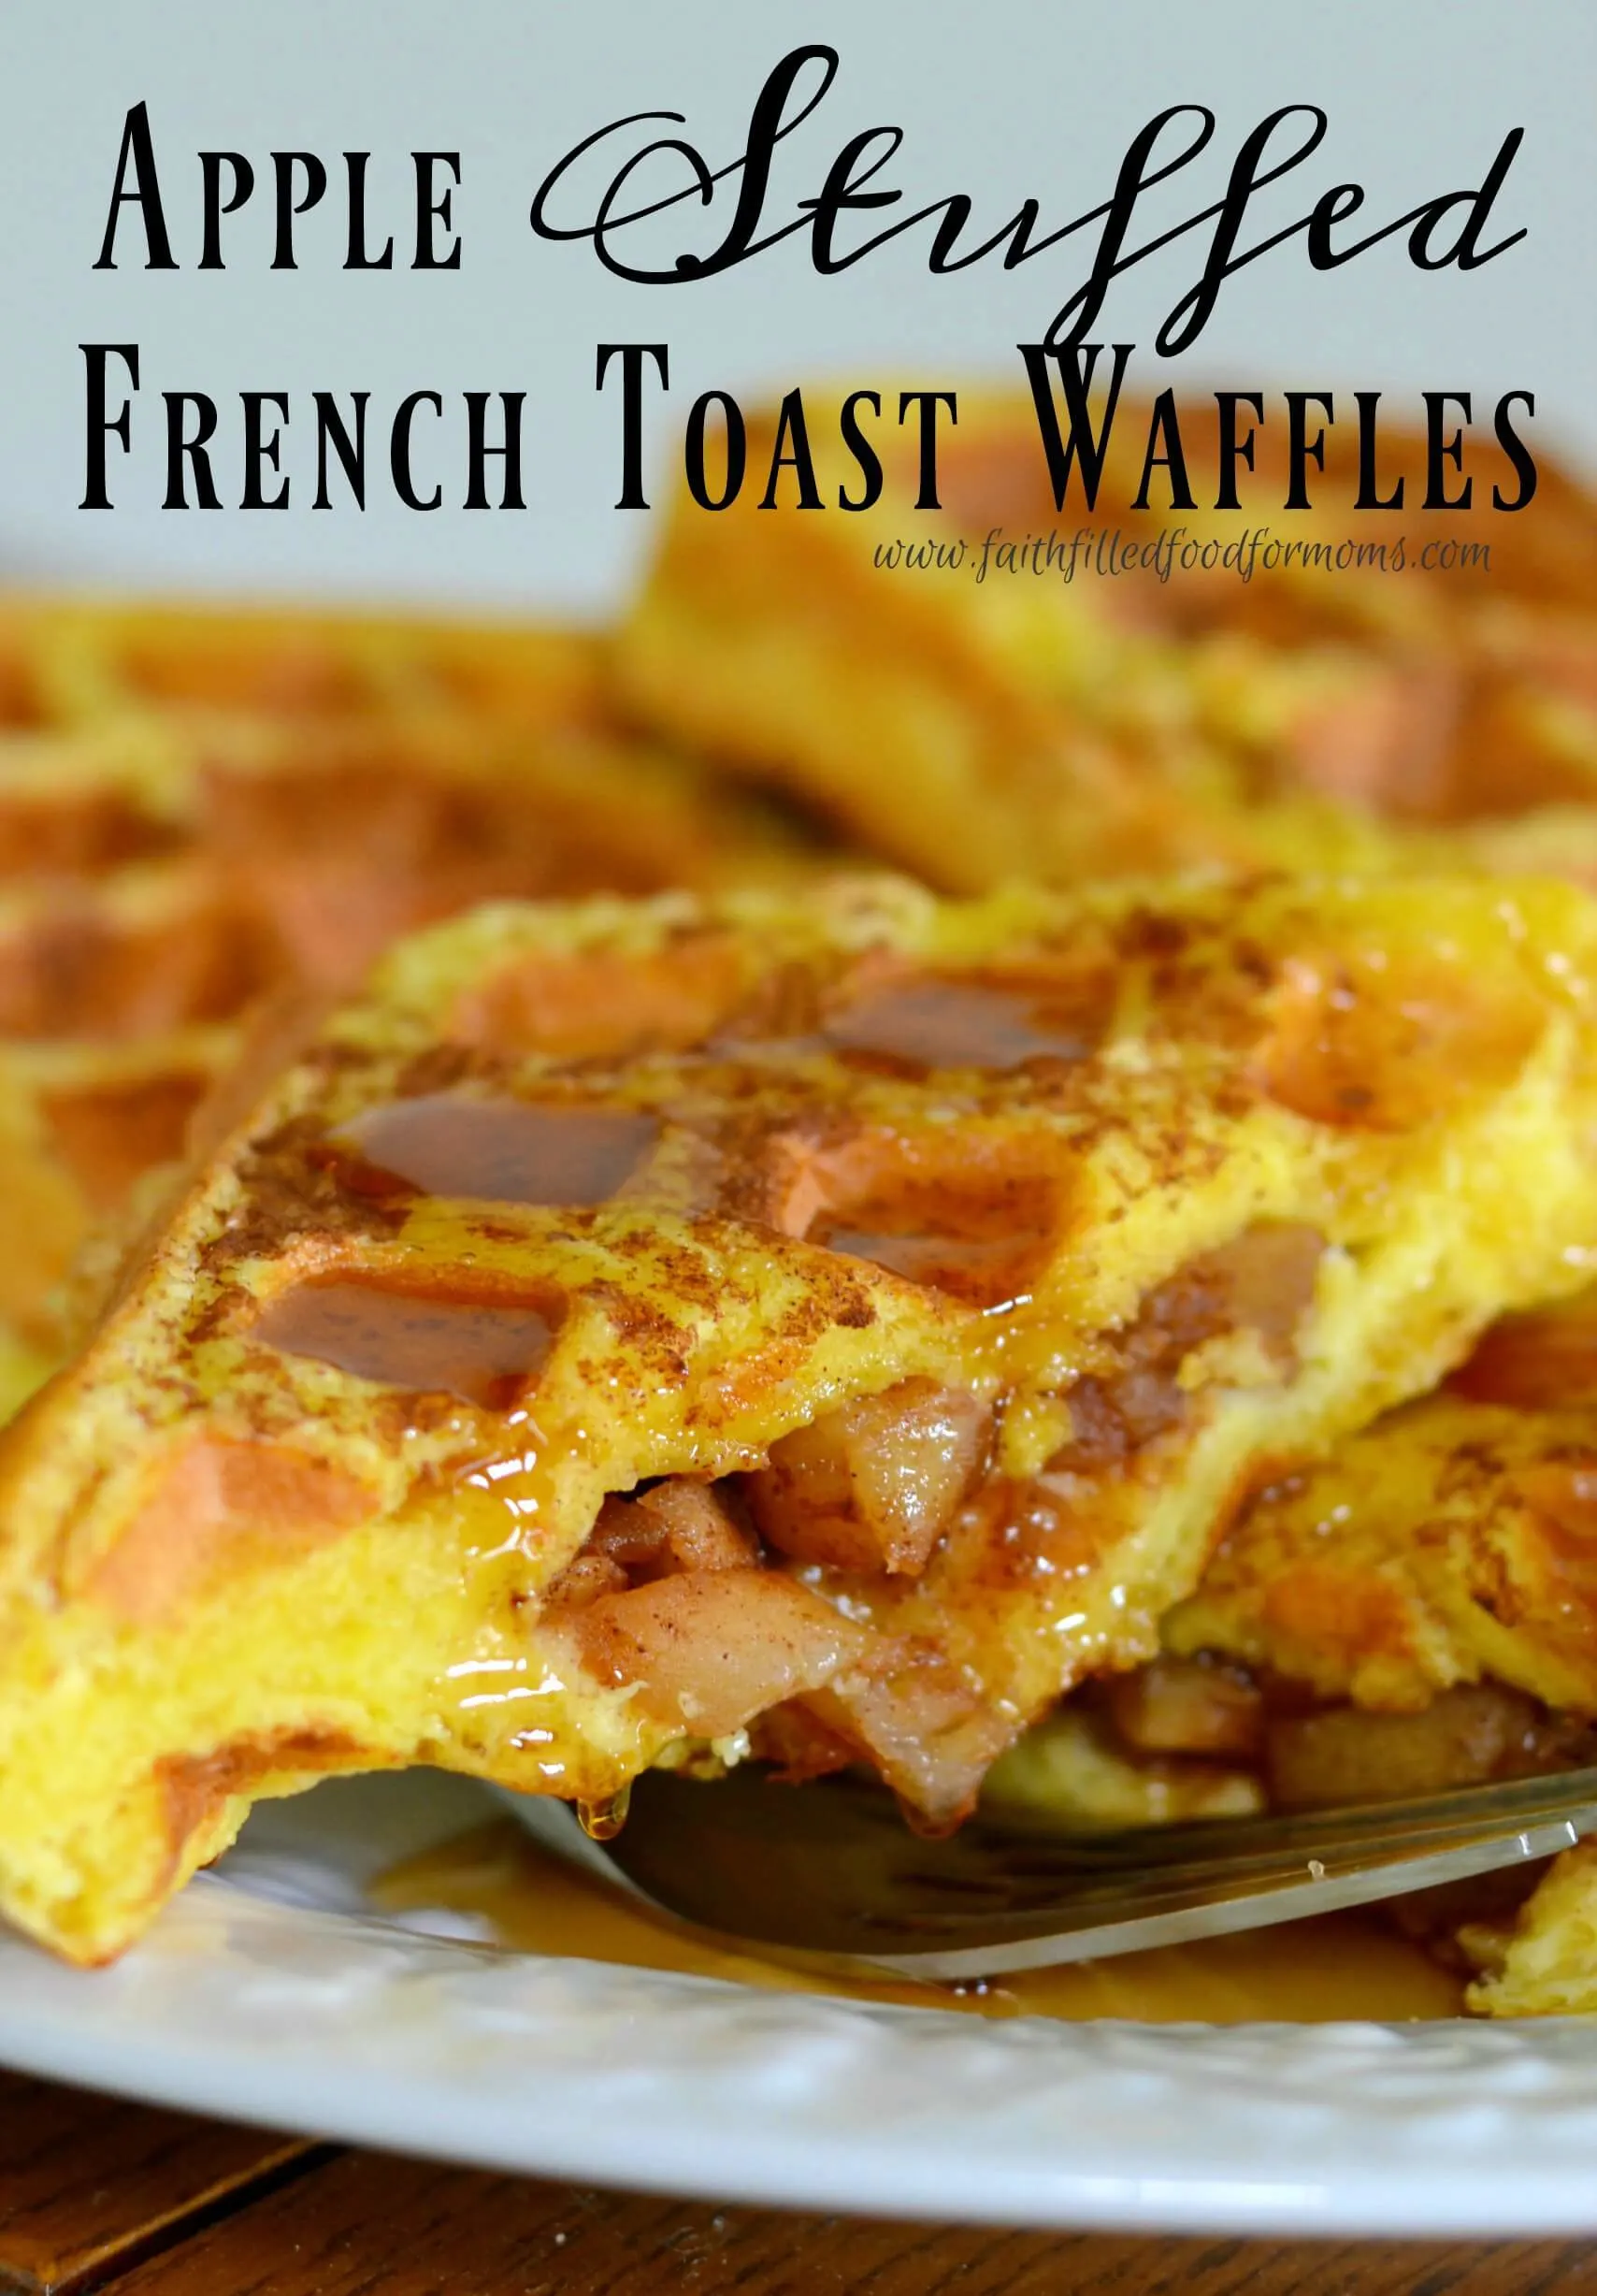 Apple Stuffed French Toast Waffles.